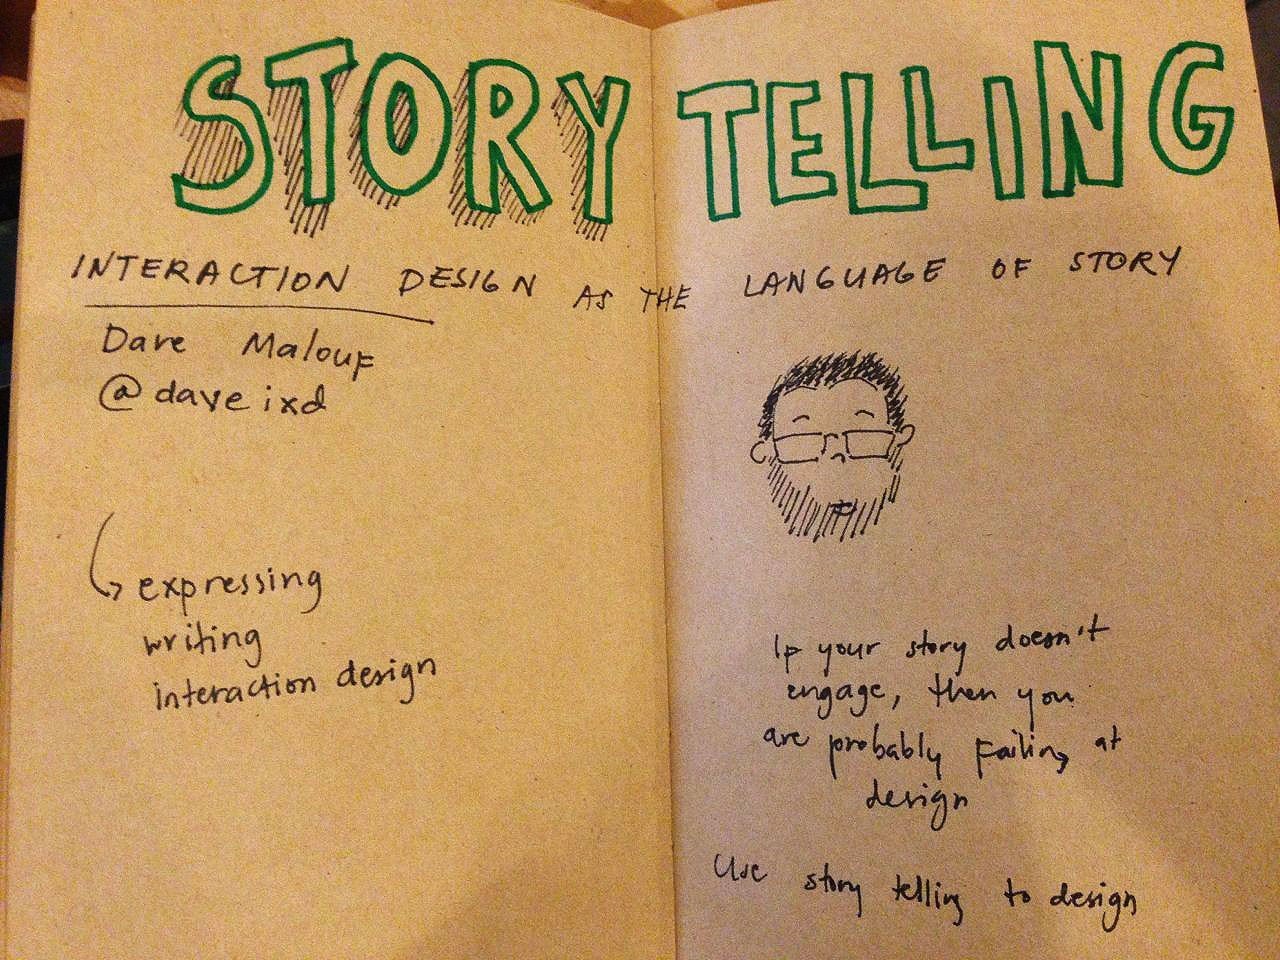 UXHK 2014 notes: Storytelling – Interaction Design as the Language of Story